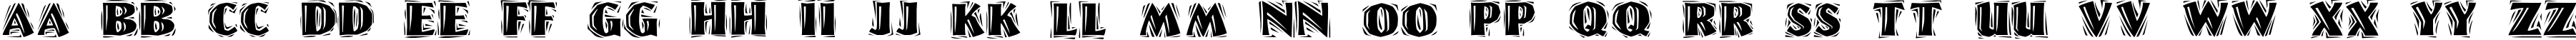 Пример написания английского алфавита шрифтом LinoLetterCutRagged